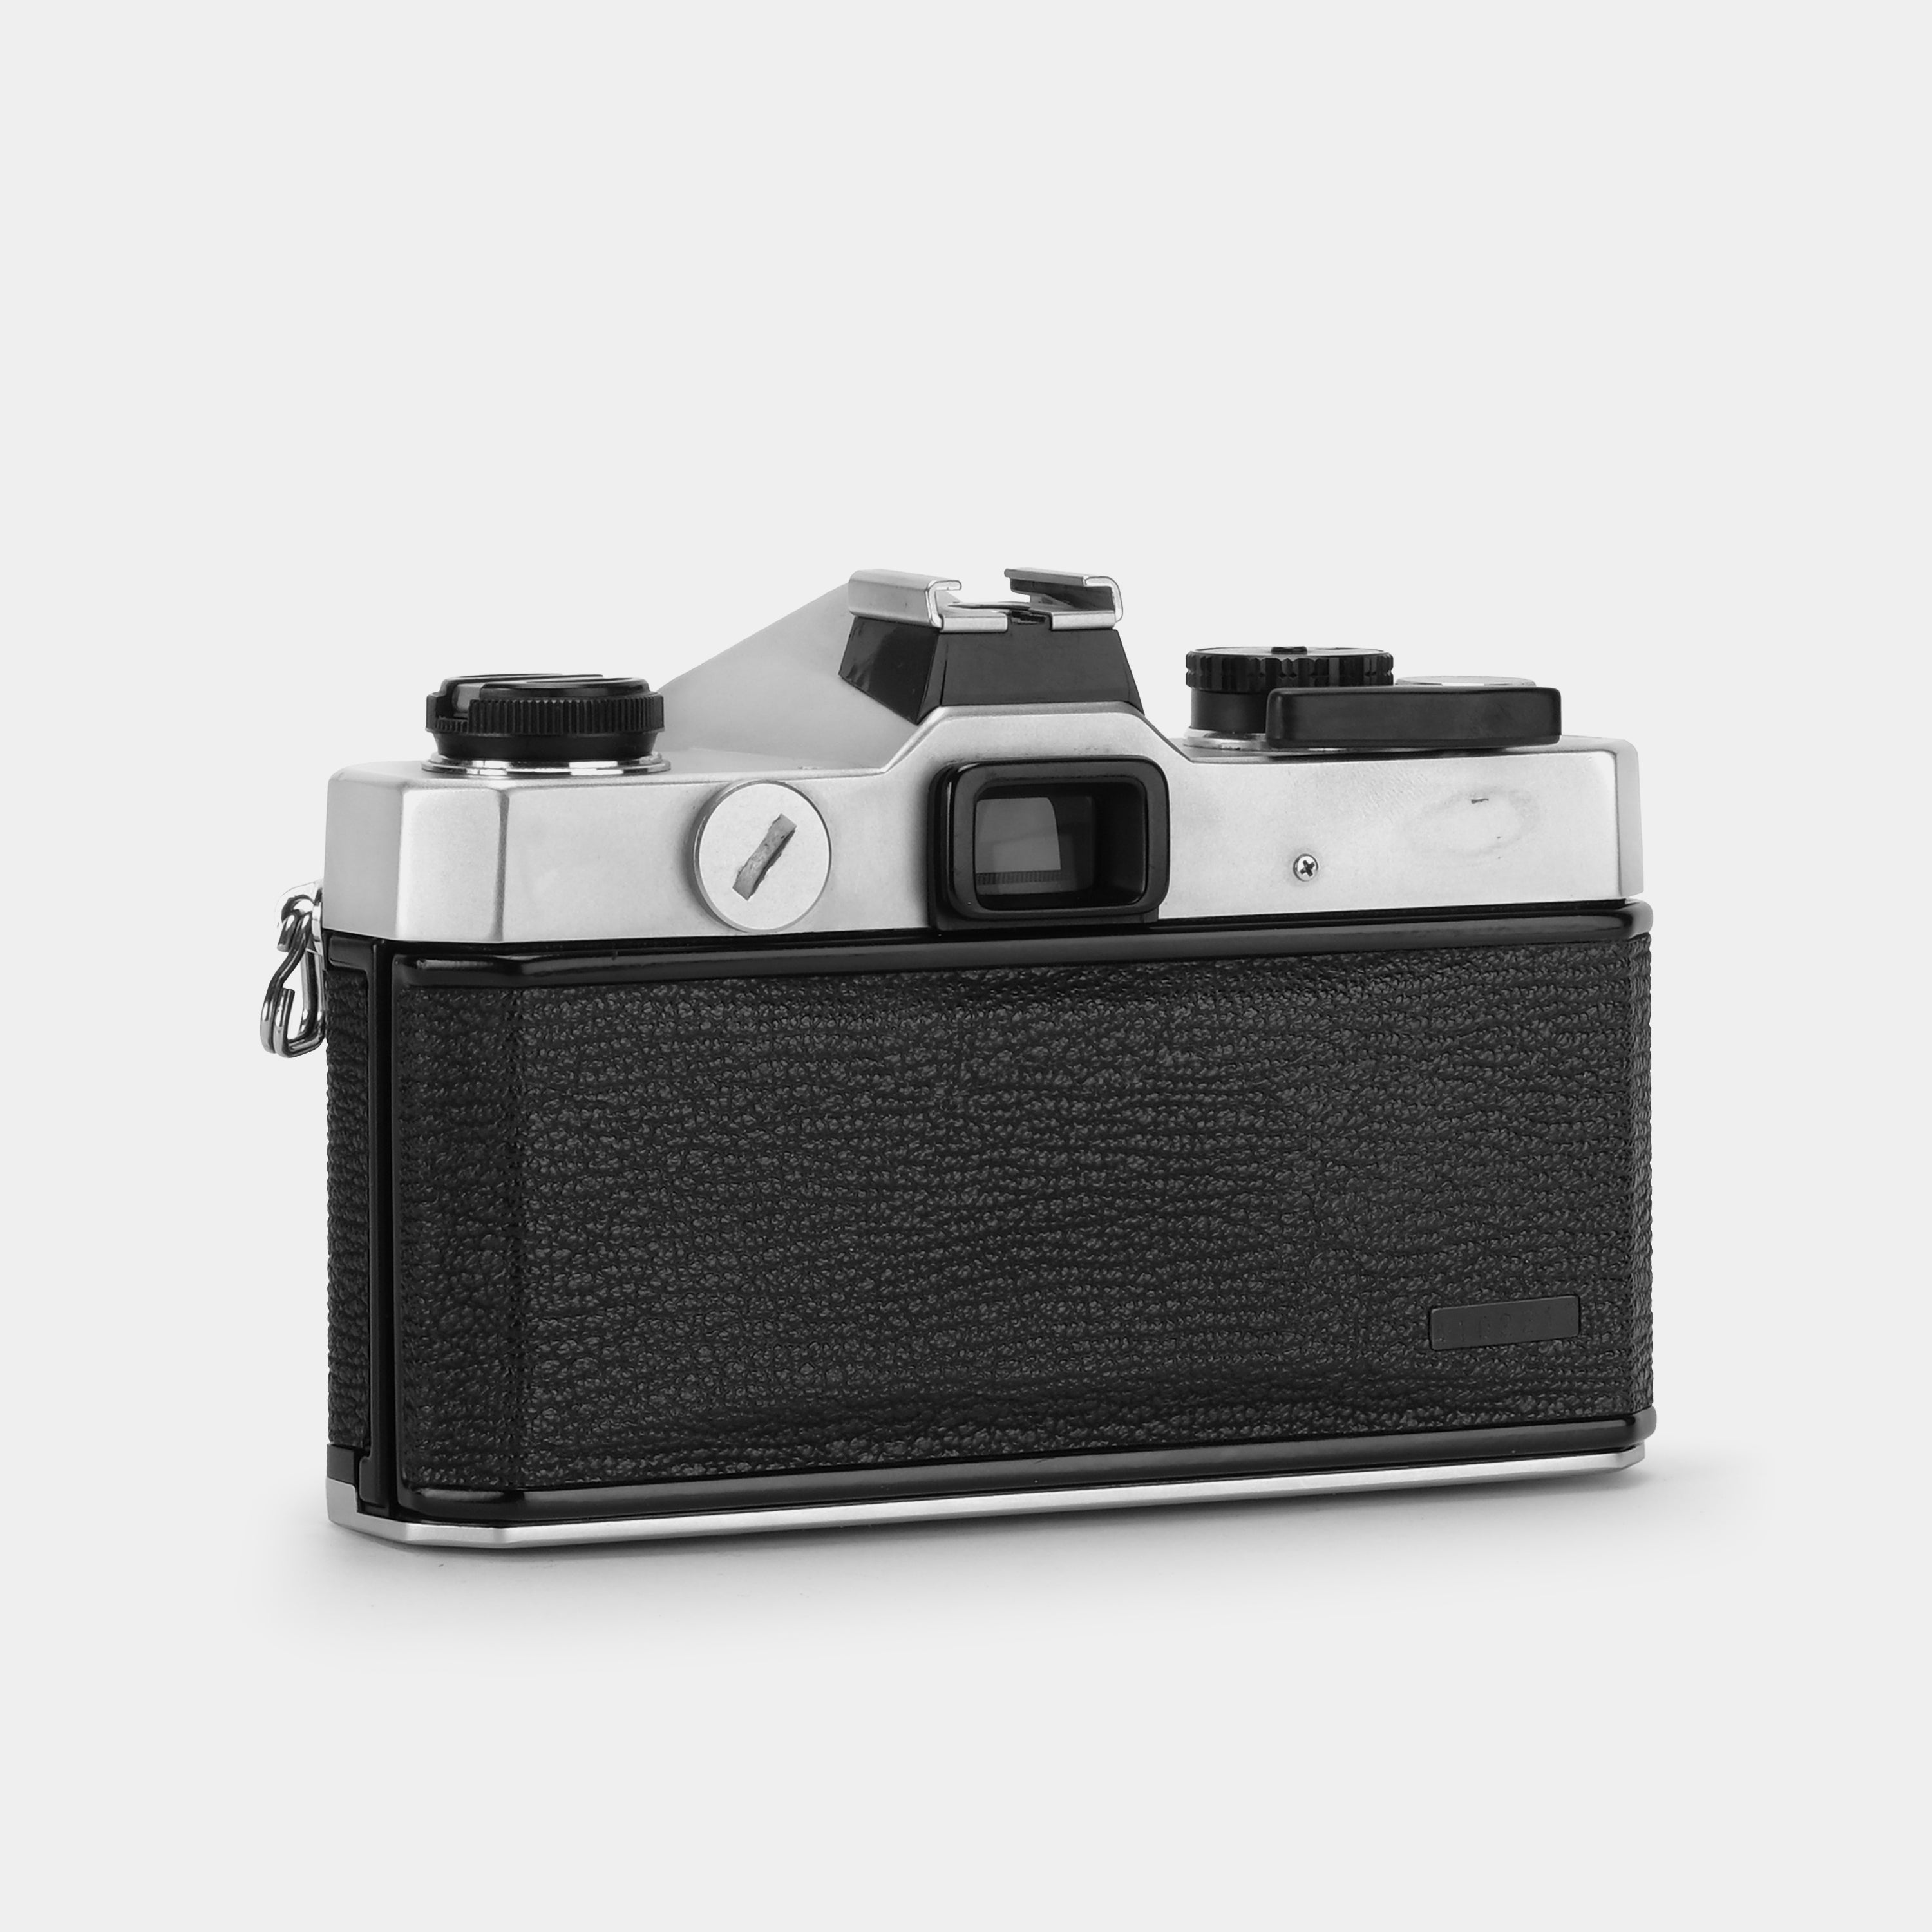 Fujica ST605N 35mm SLR Film Camera